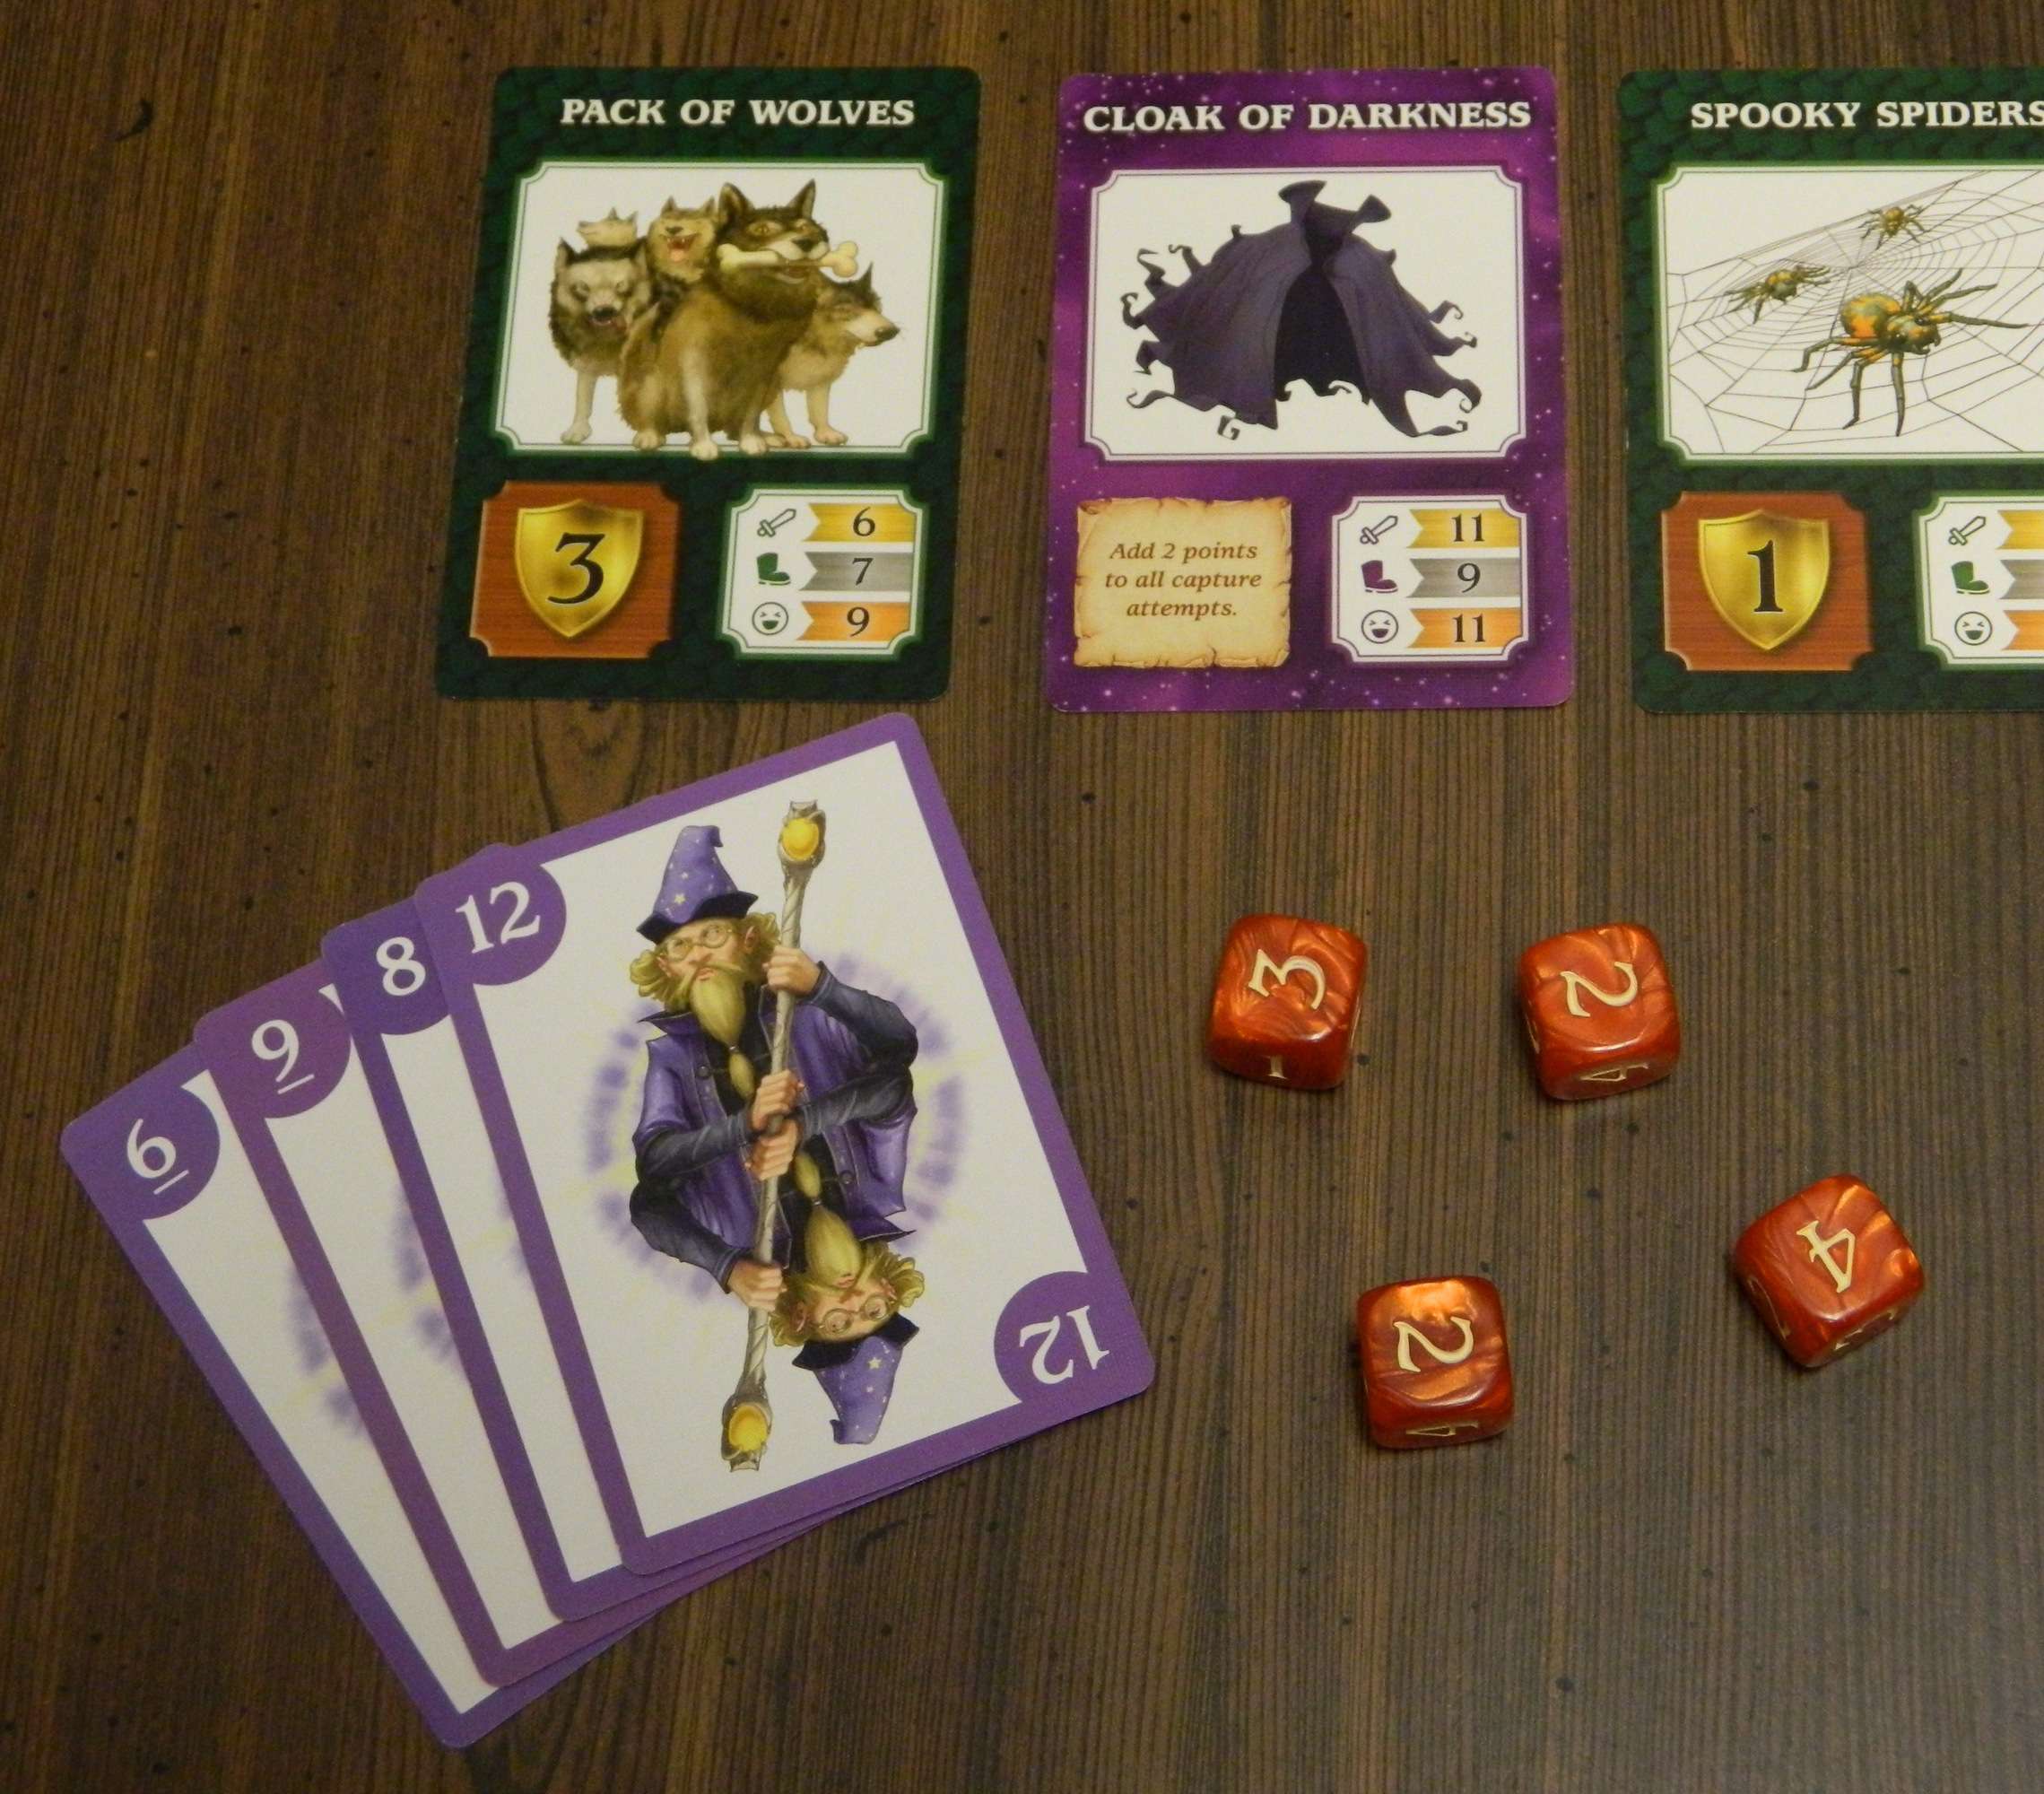 dragonwood a game of dice & daring board game